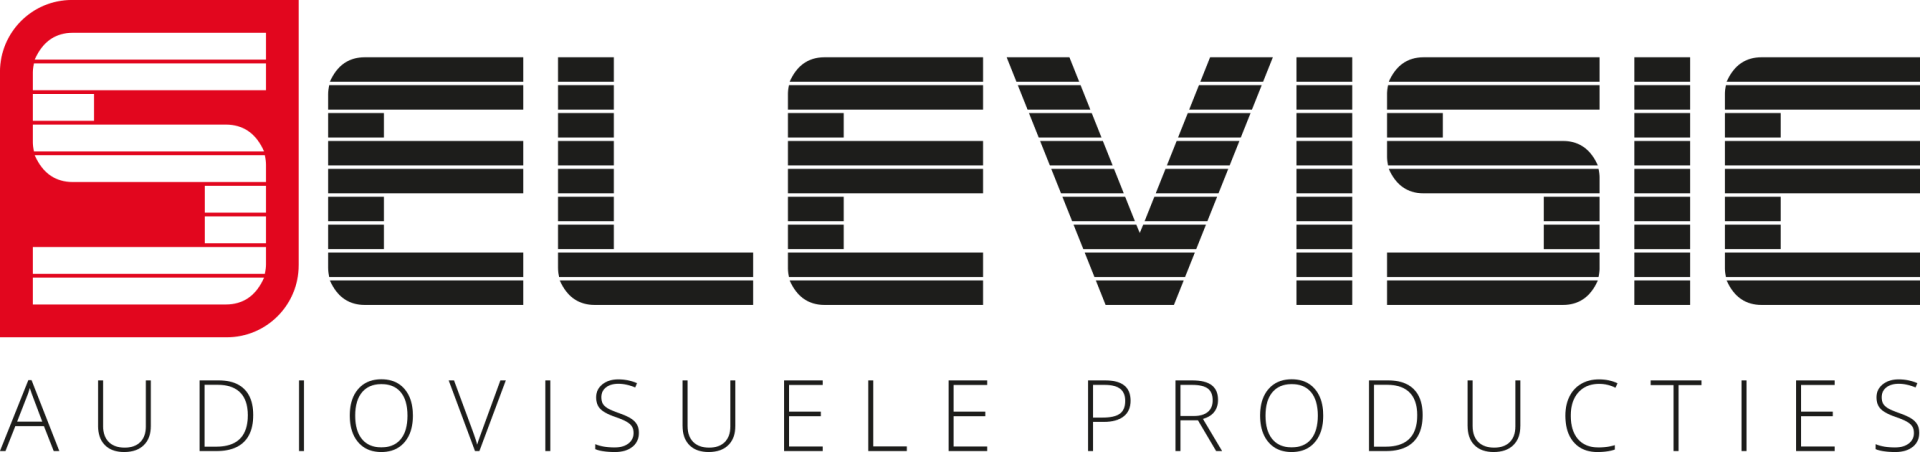 logo + tagline Selevisie